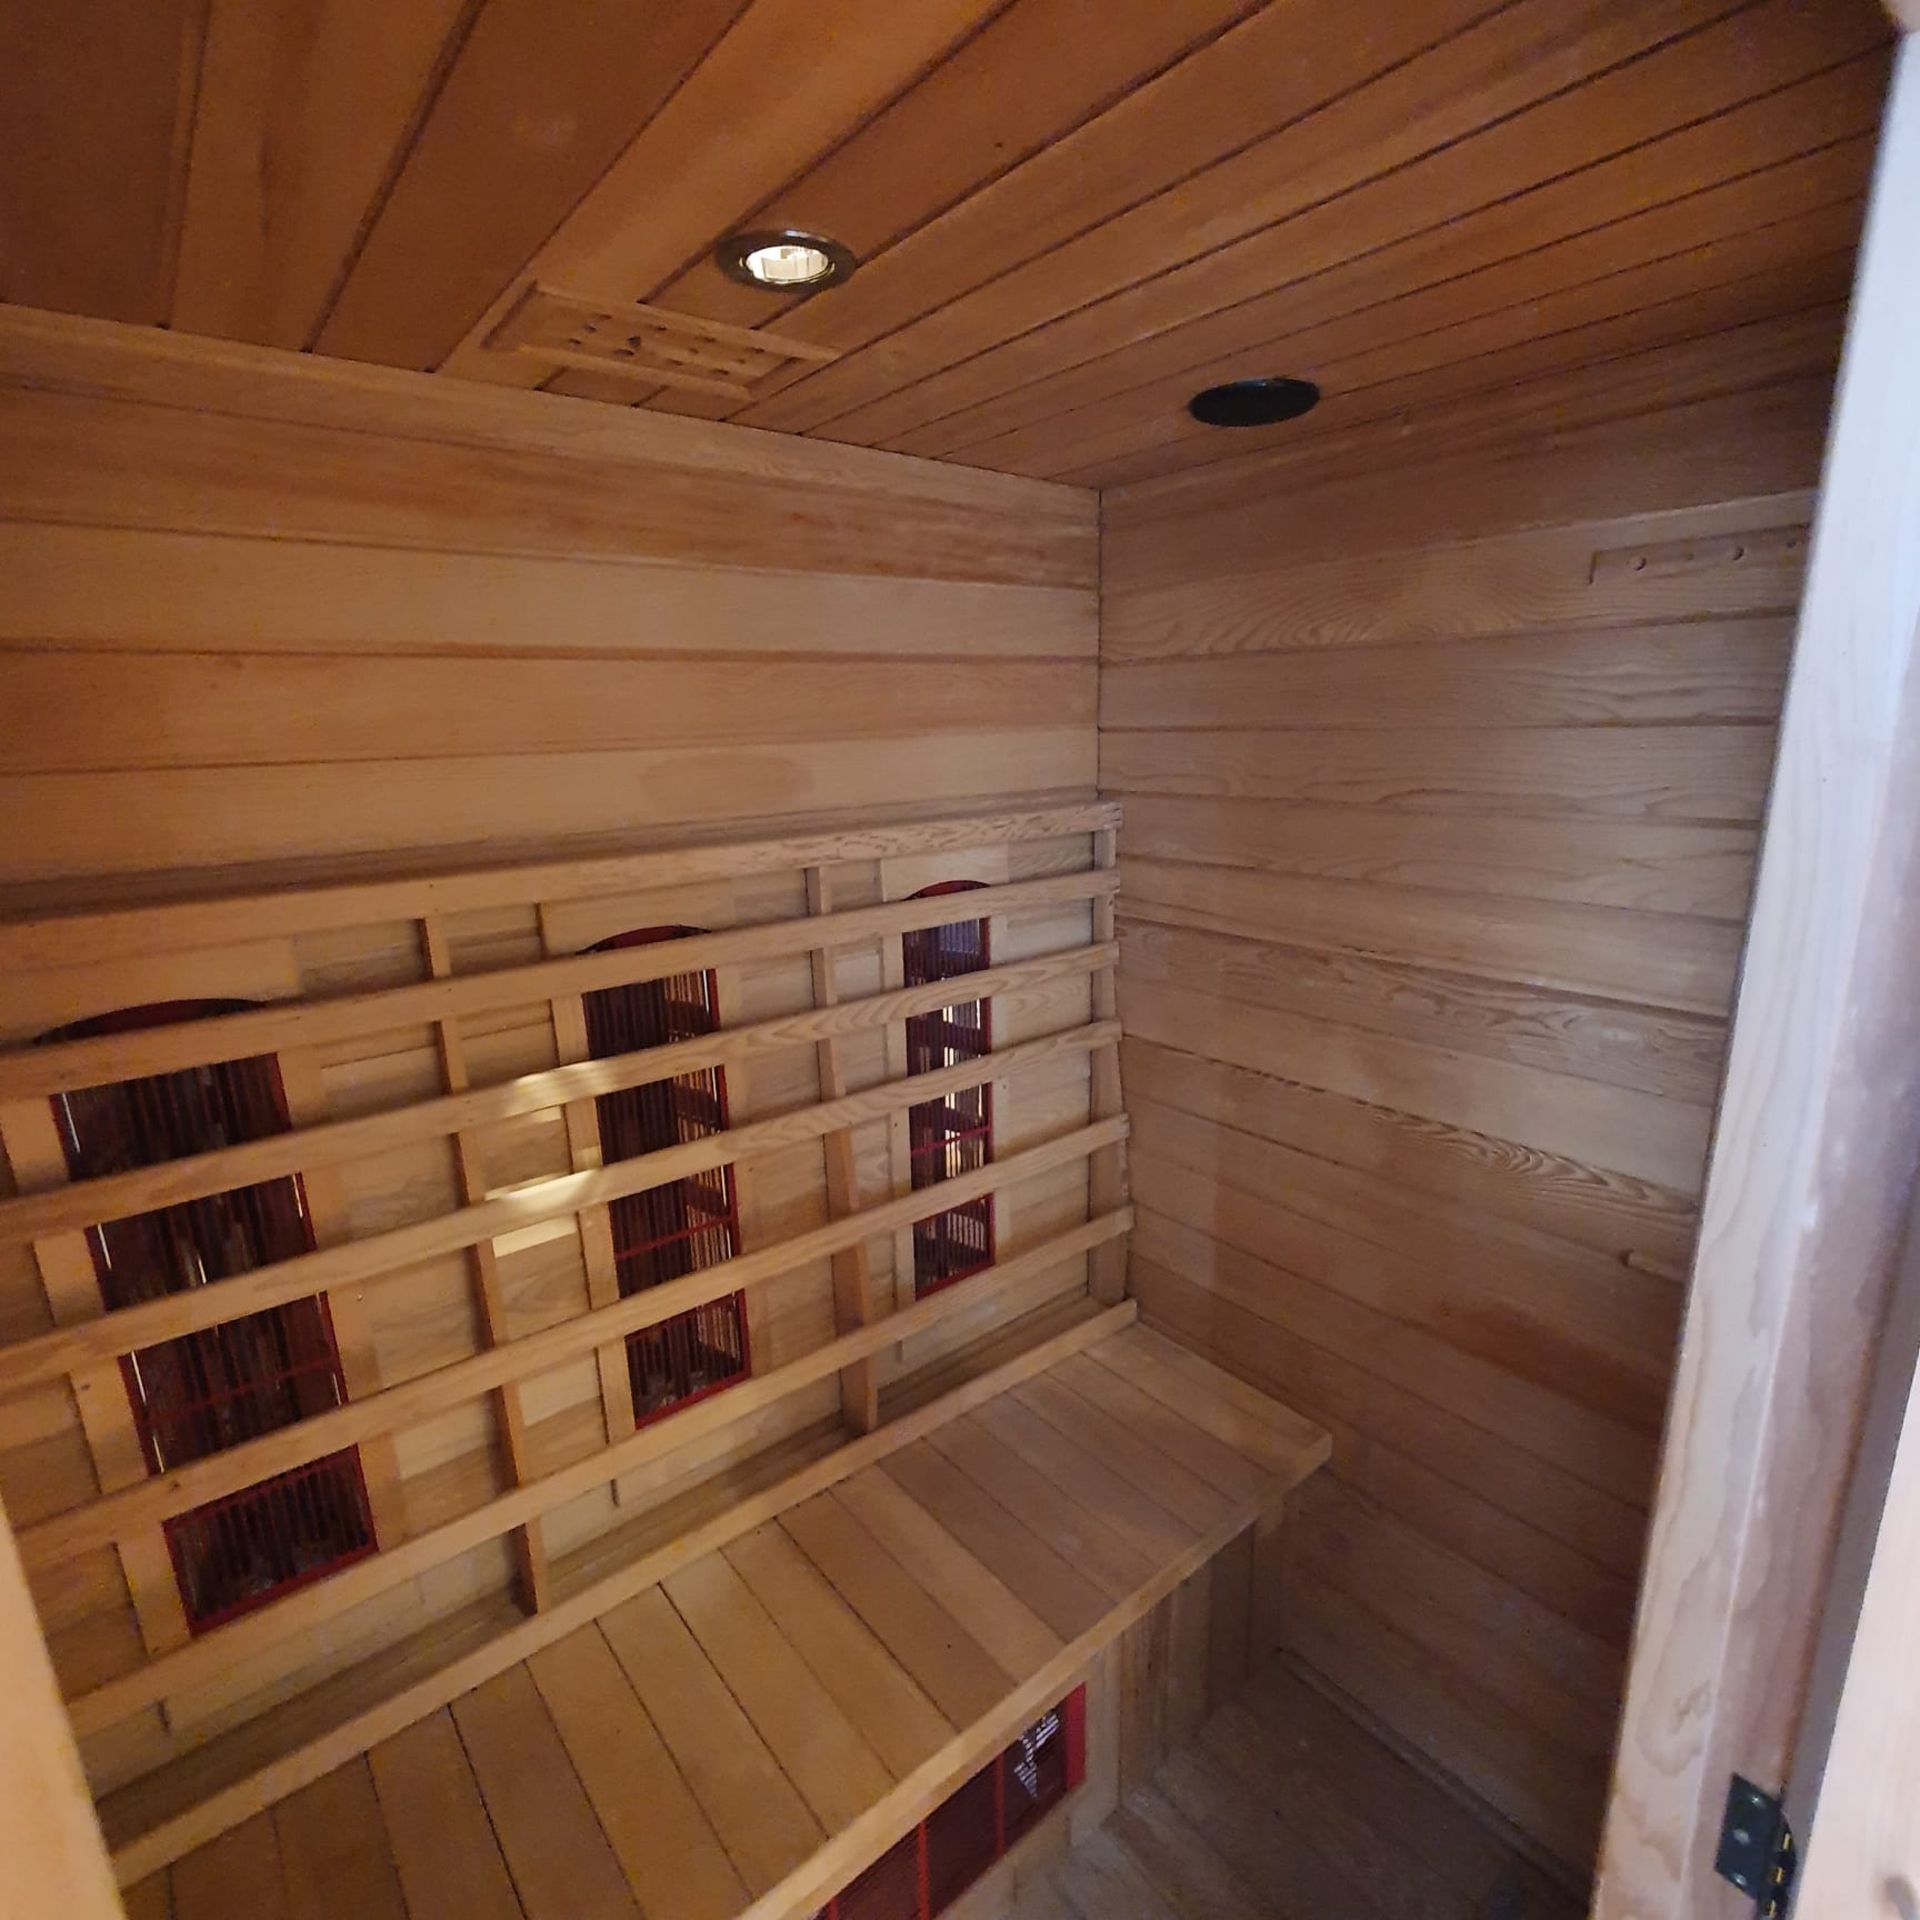 Infrared Sauna Room with Music System. Approx 1550mm Width, 1100mm Deep, 1900mm High. - Bild 4 aus 10